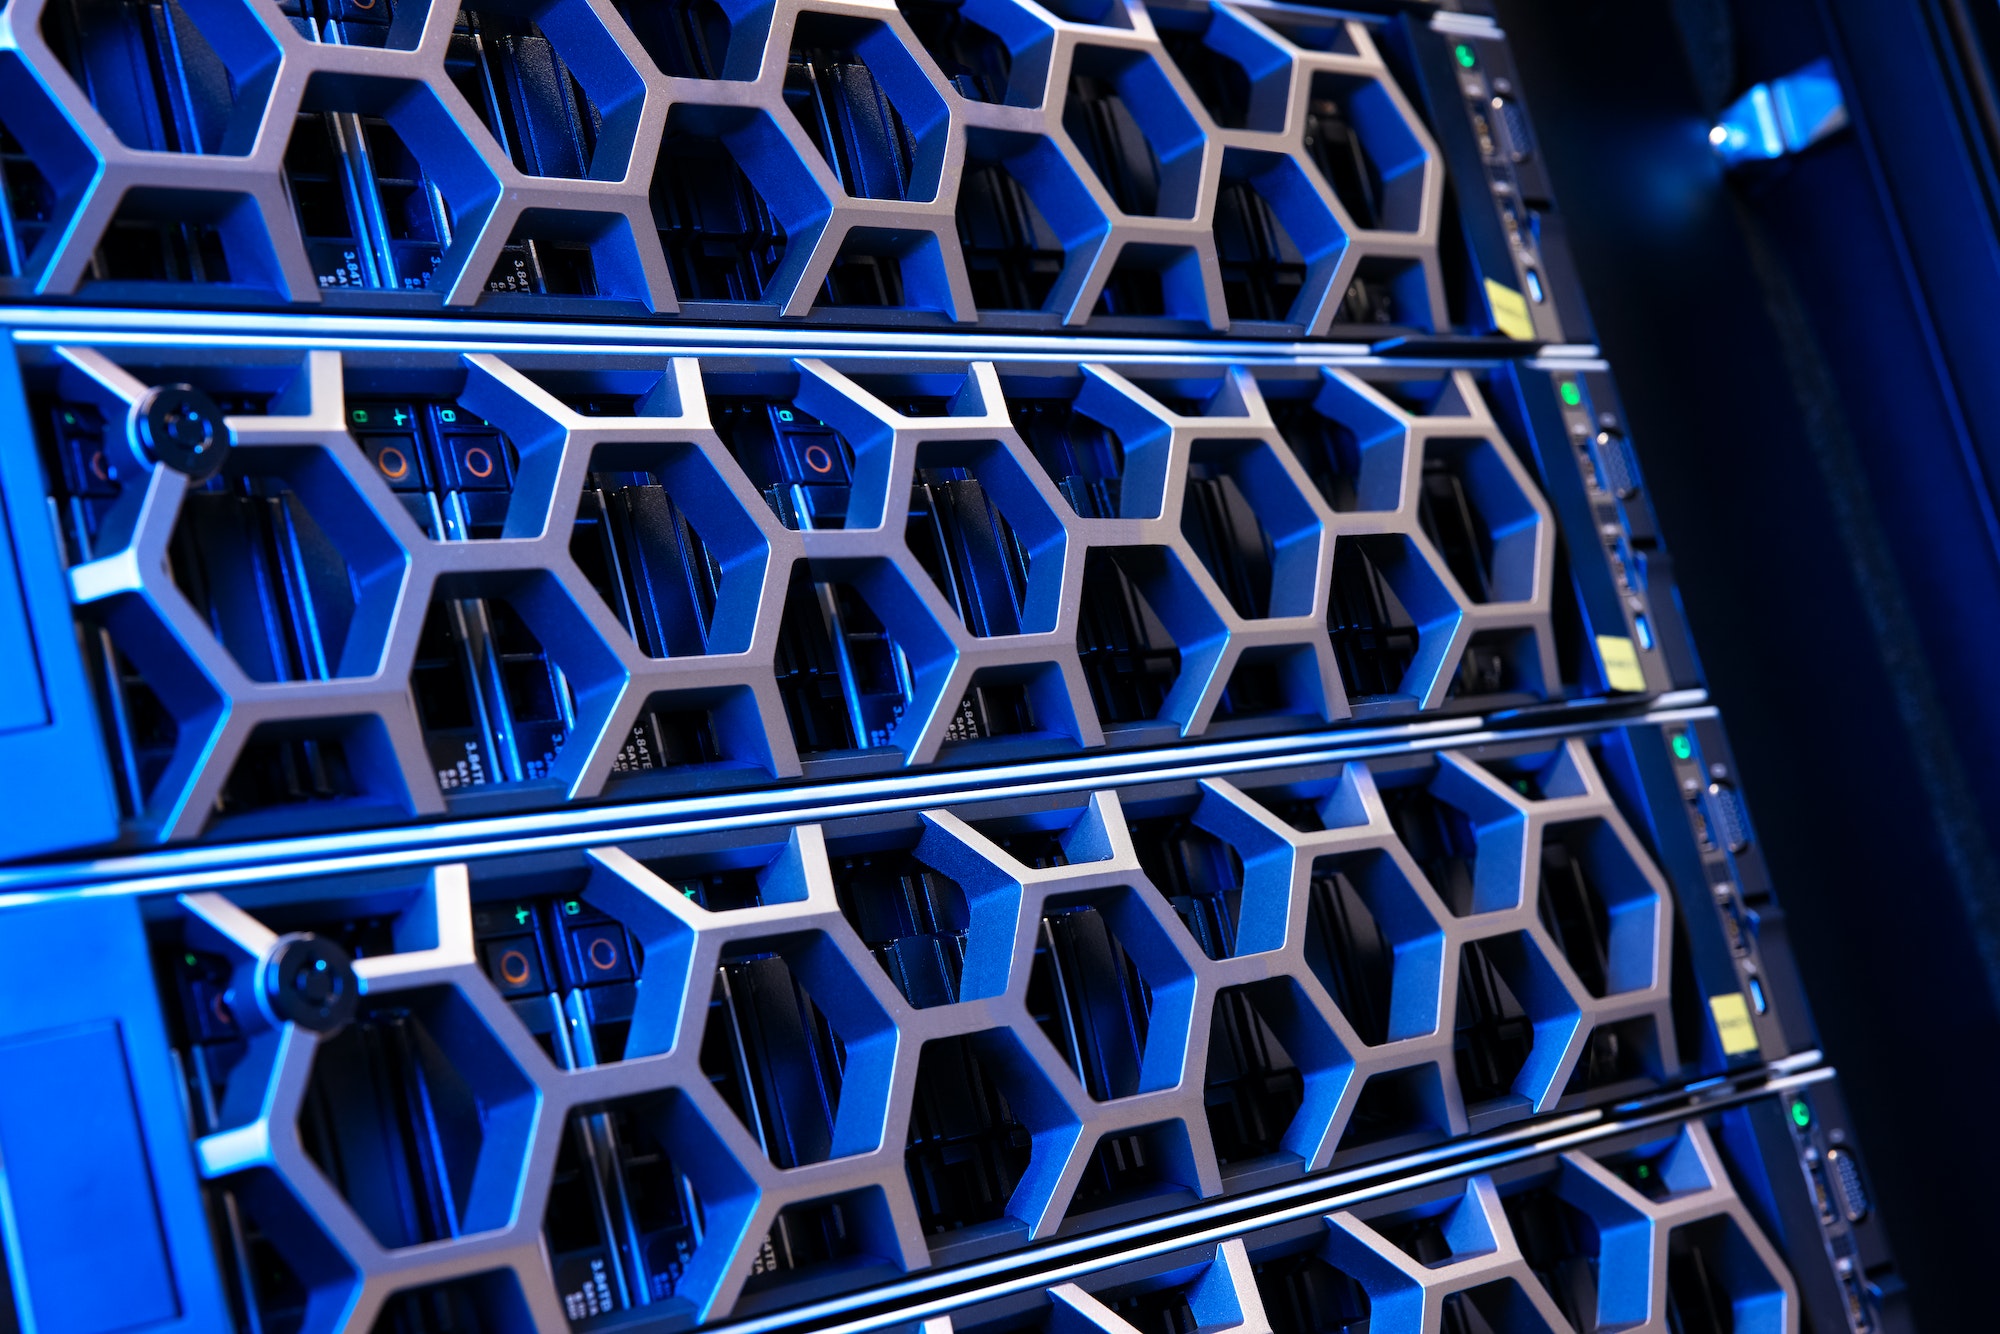 Illuminated Blue Server Hardware In Modern Datacenter